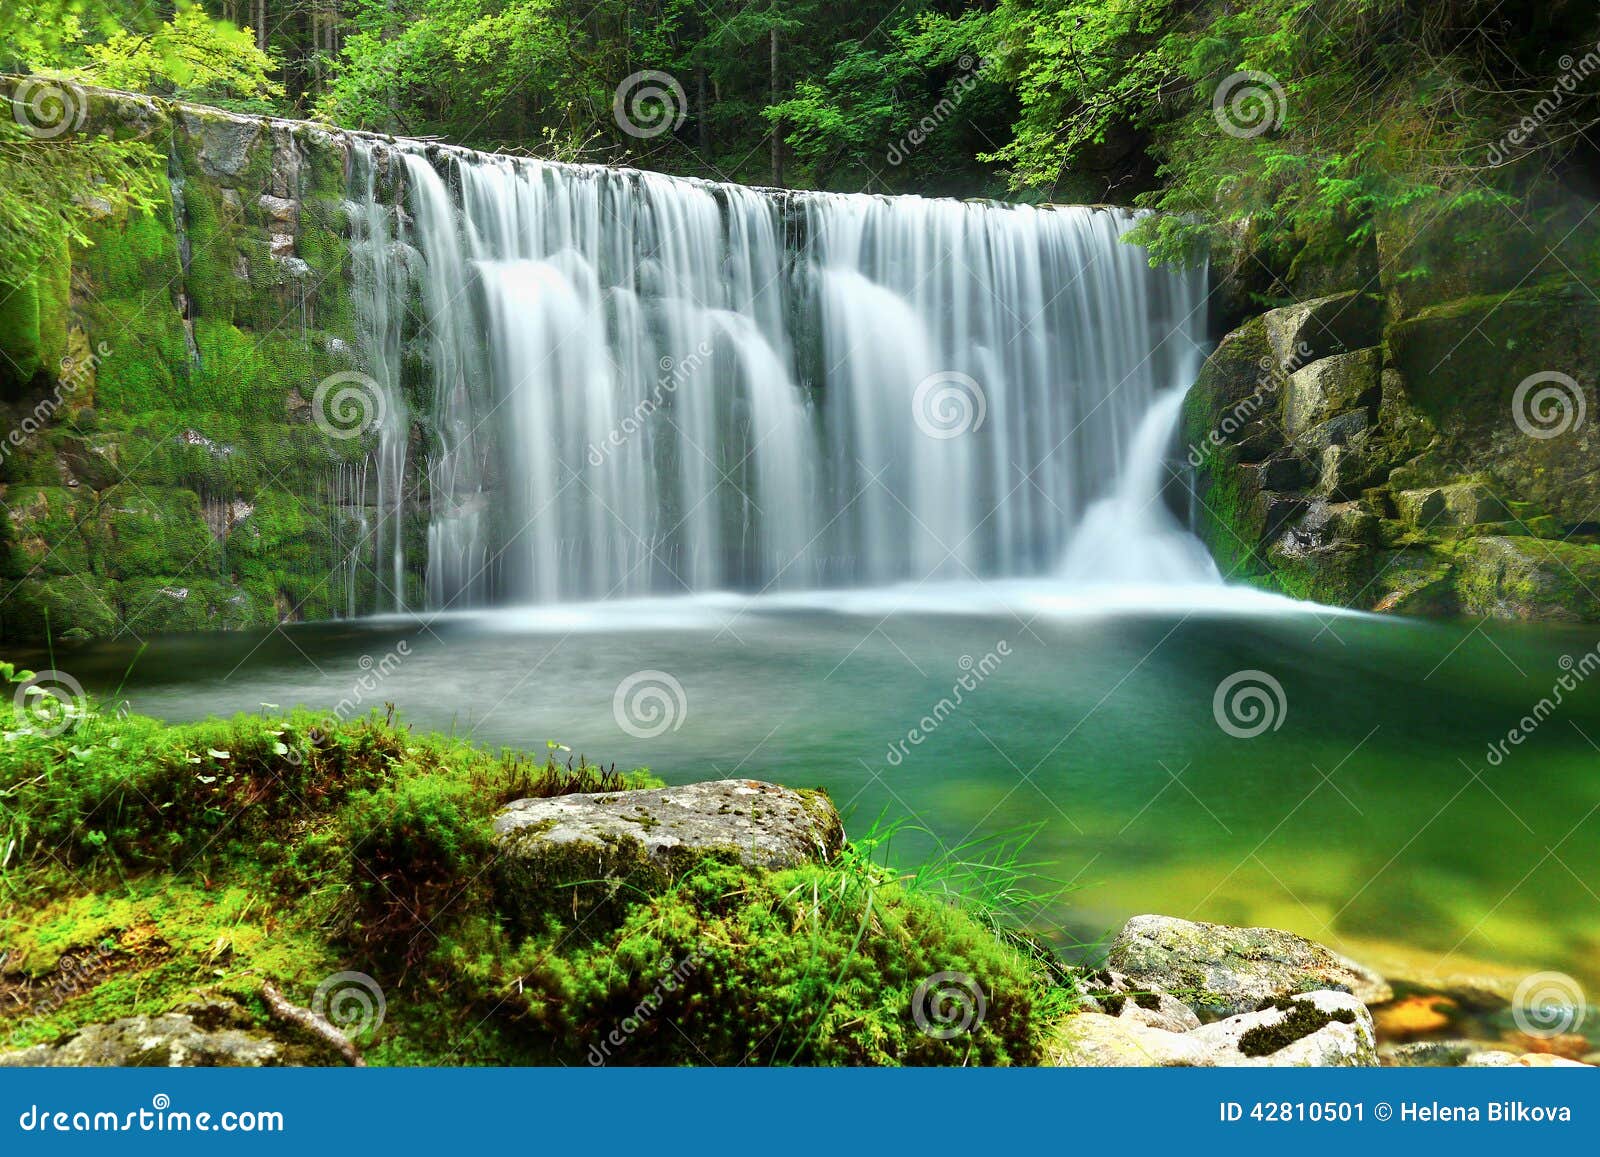 waterfalls emerald lake forest landscape